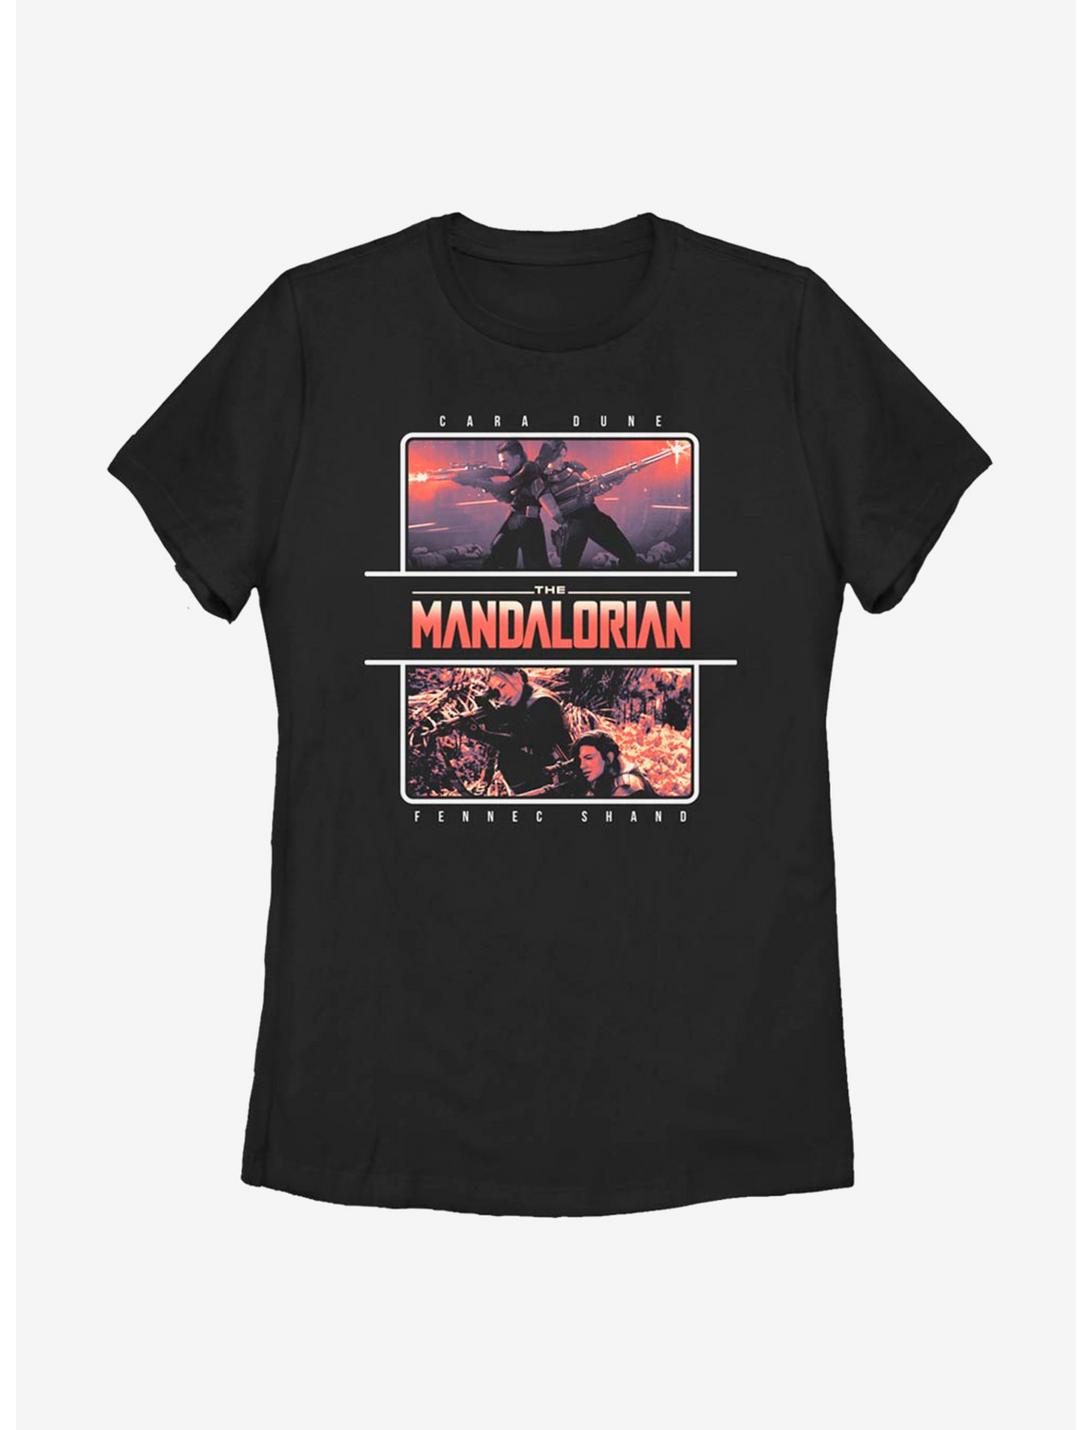 Star Wars The Mandalorian Season 2 Dune Shand Team Womens T-Shirt, BLACK, hi-res